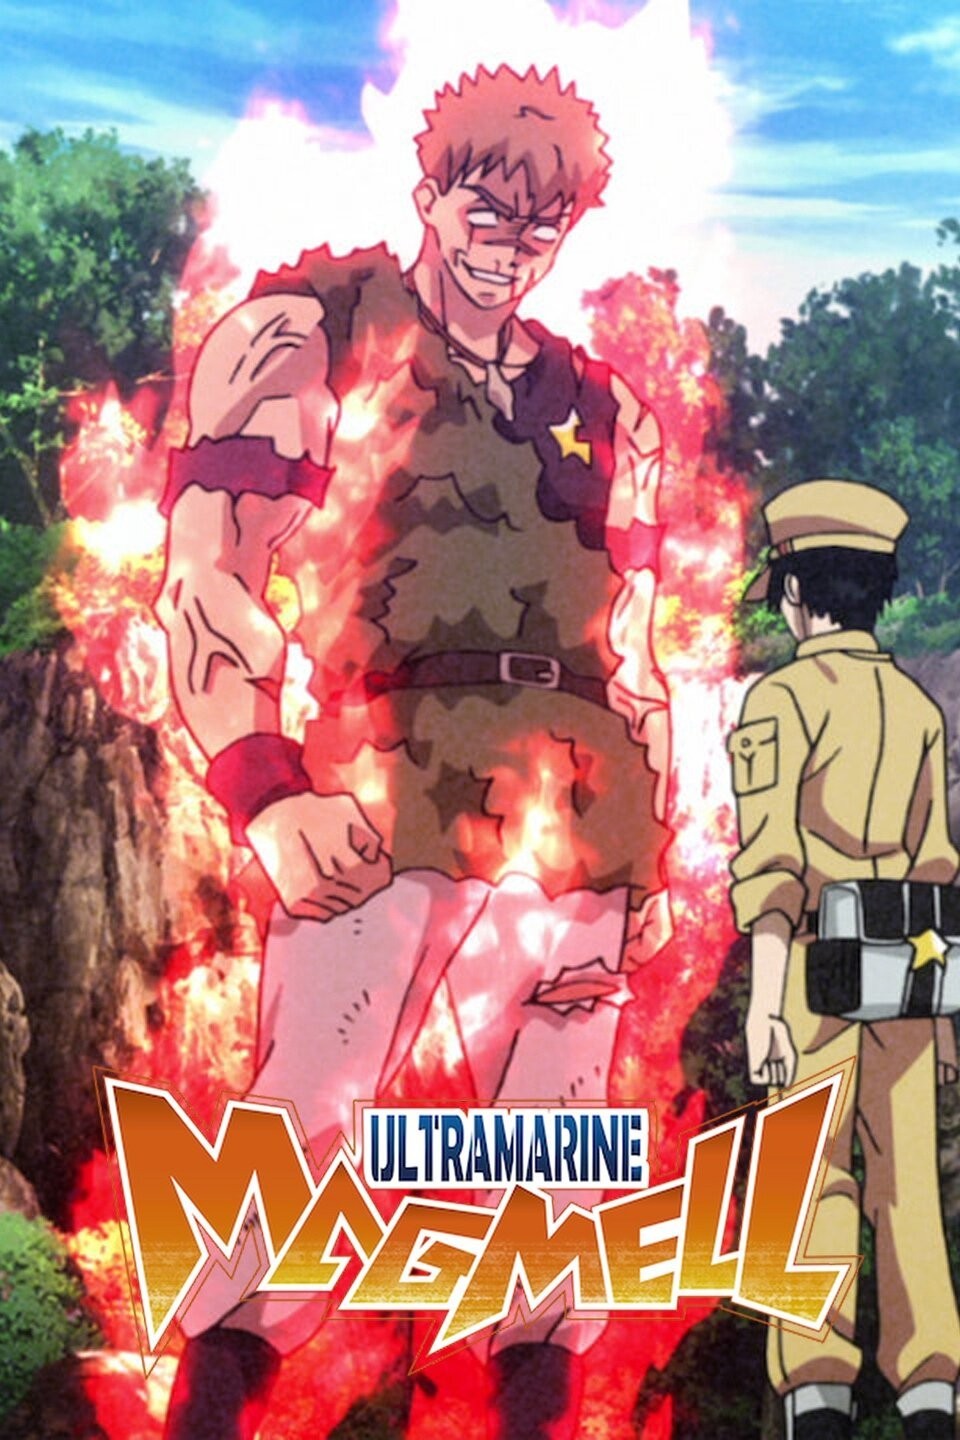 Ultramarine Magmell TV Series (2019)  Anime, Movies by genre, Anime movies